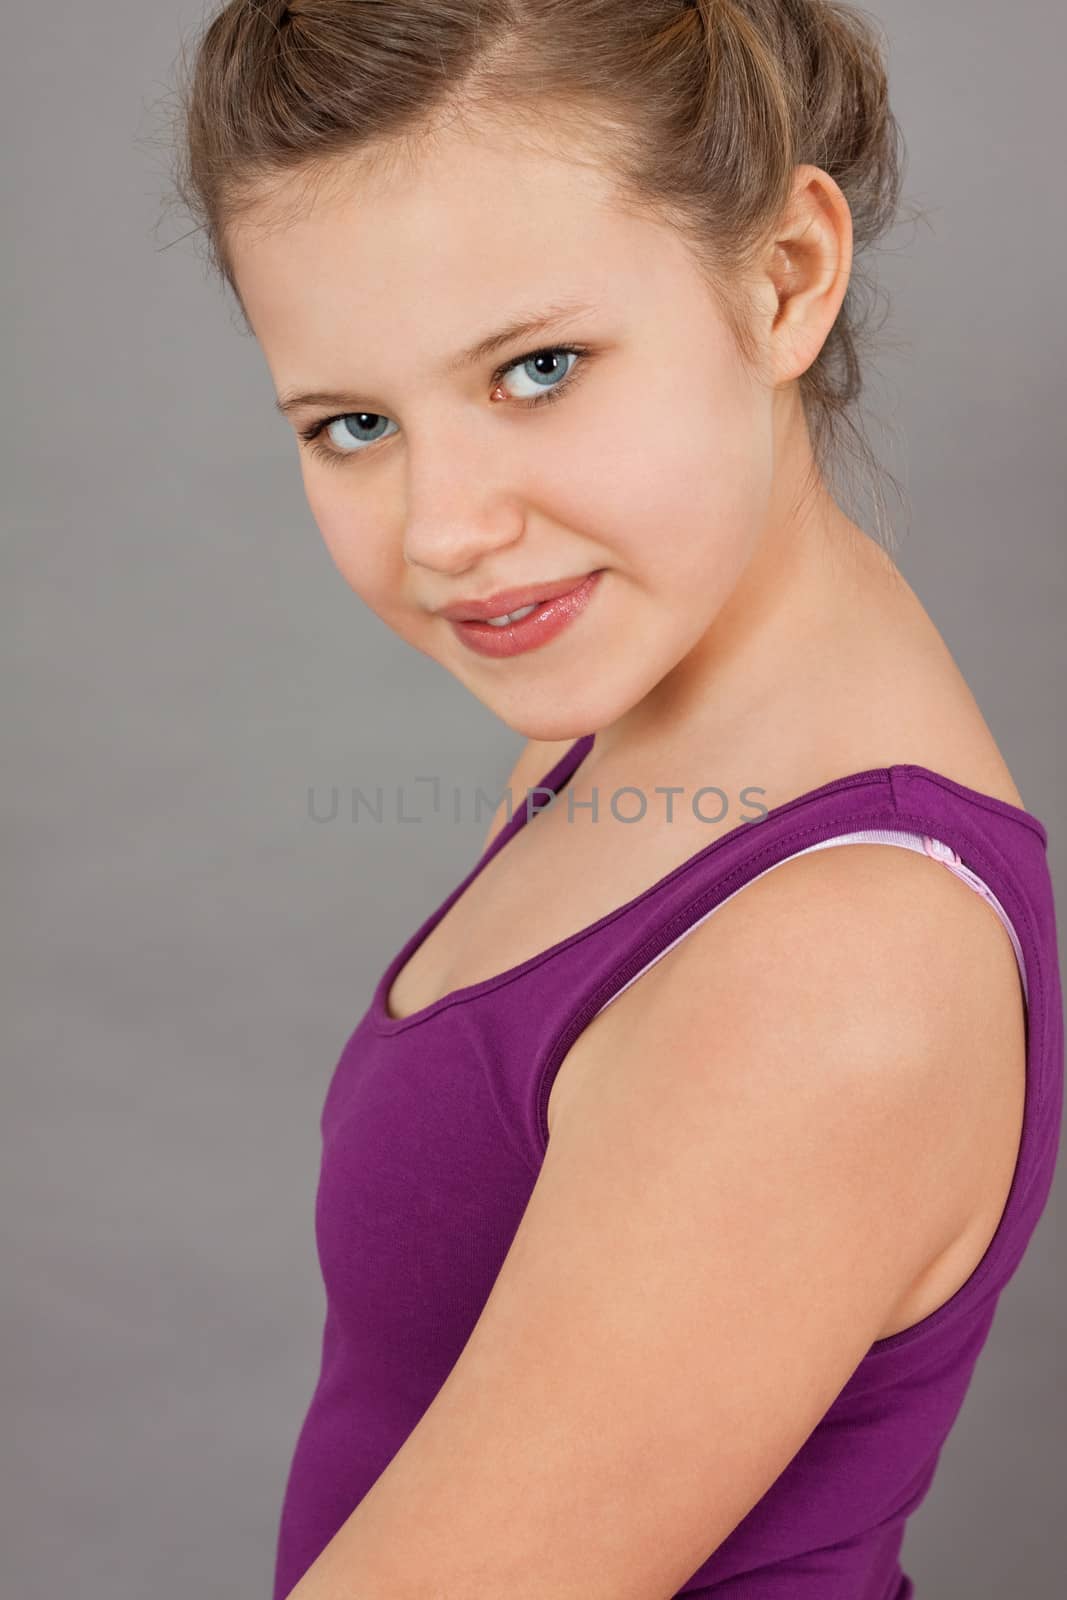 young teenager girl smiling having fun by juniart